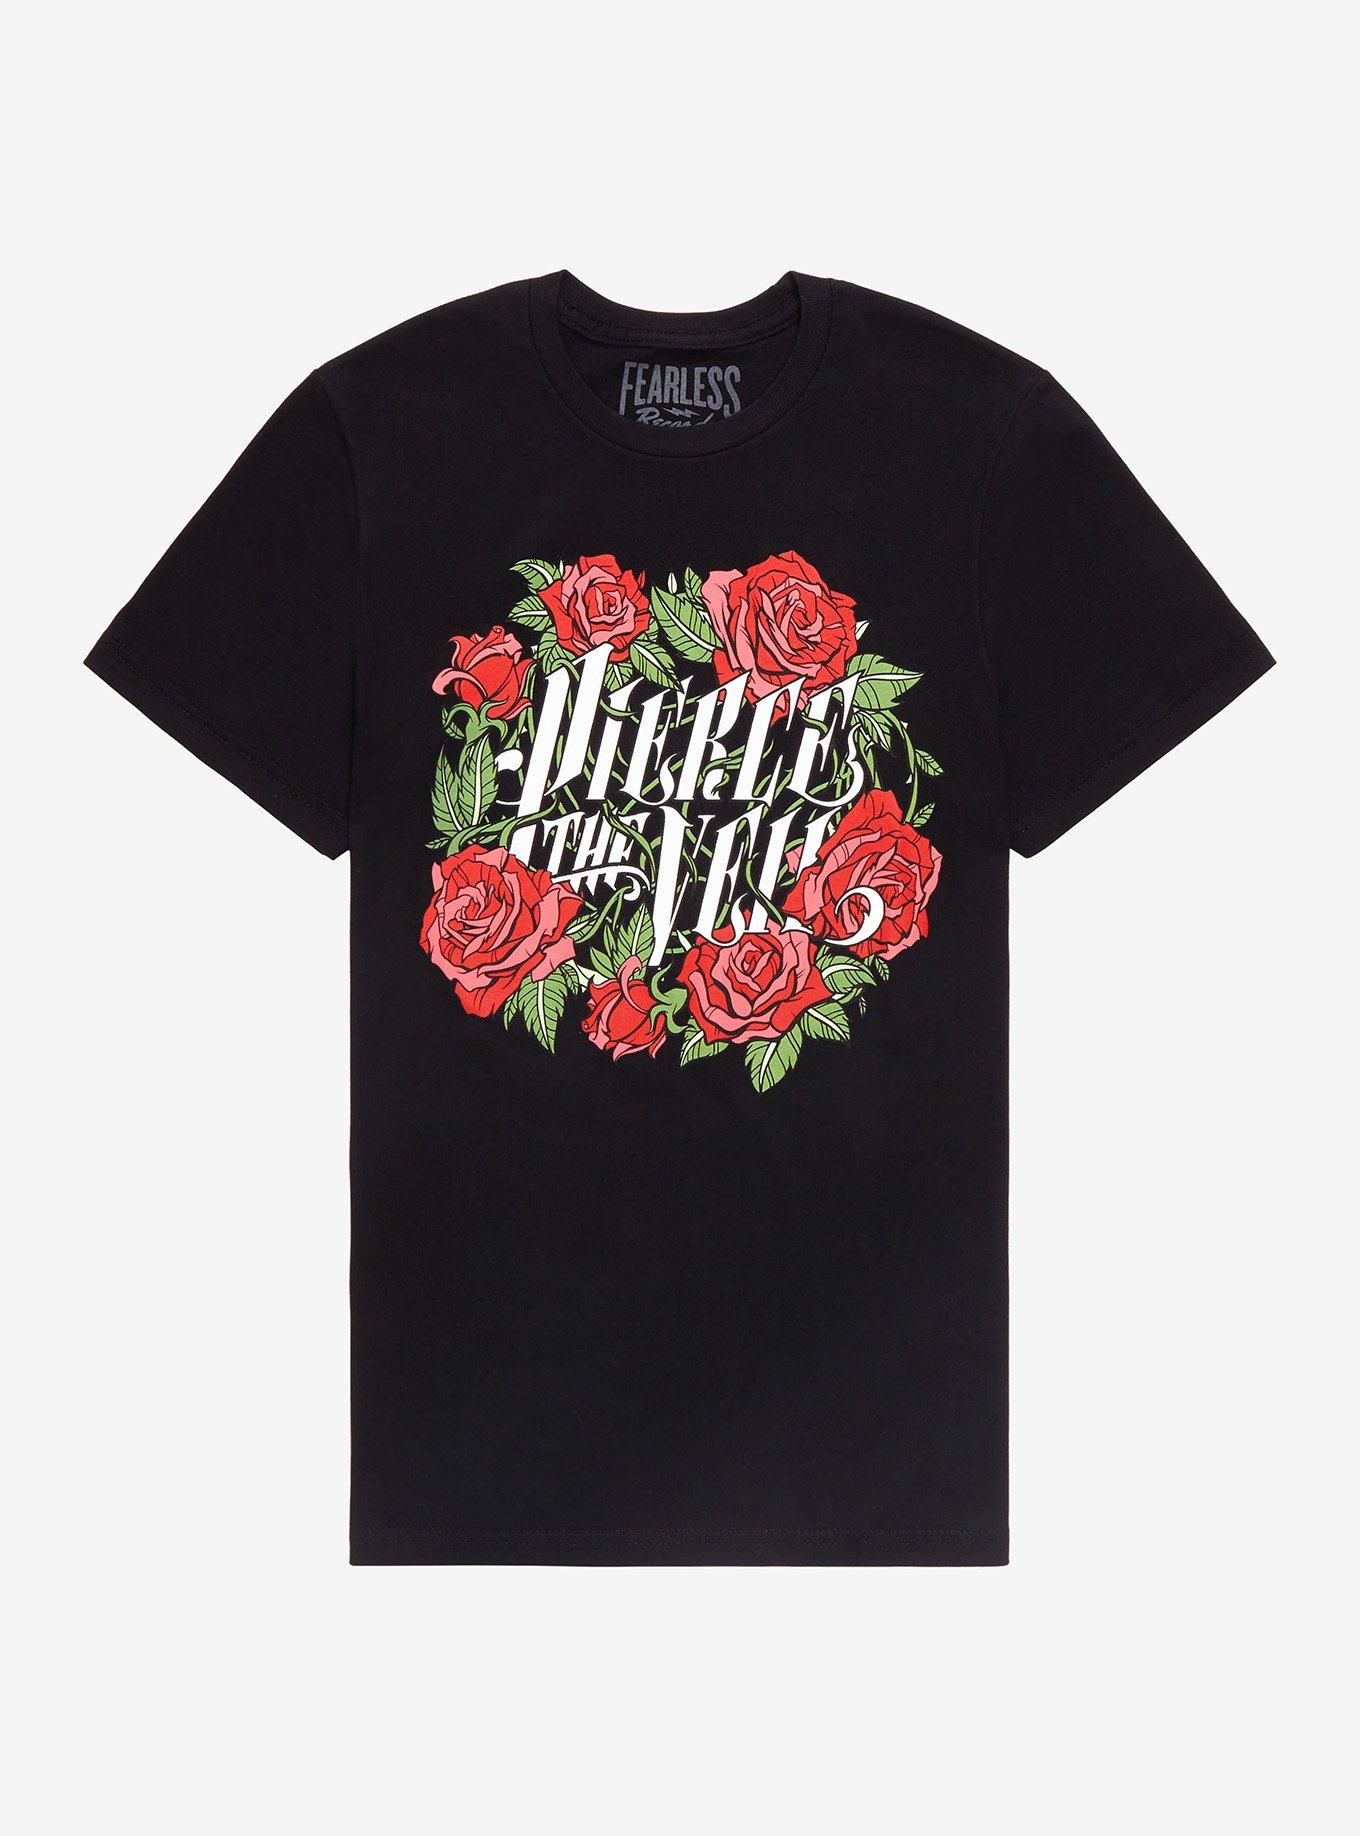 Pierce The Veil Roses Boyfriend Fit Girls T-Shirt